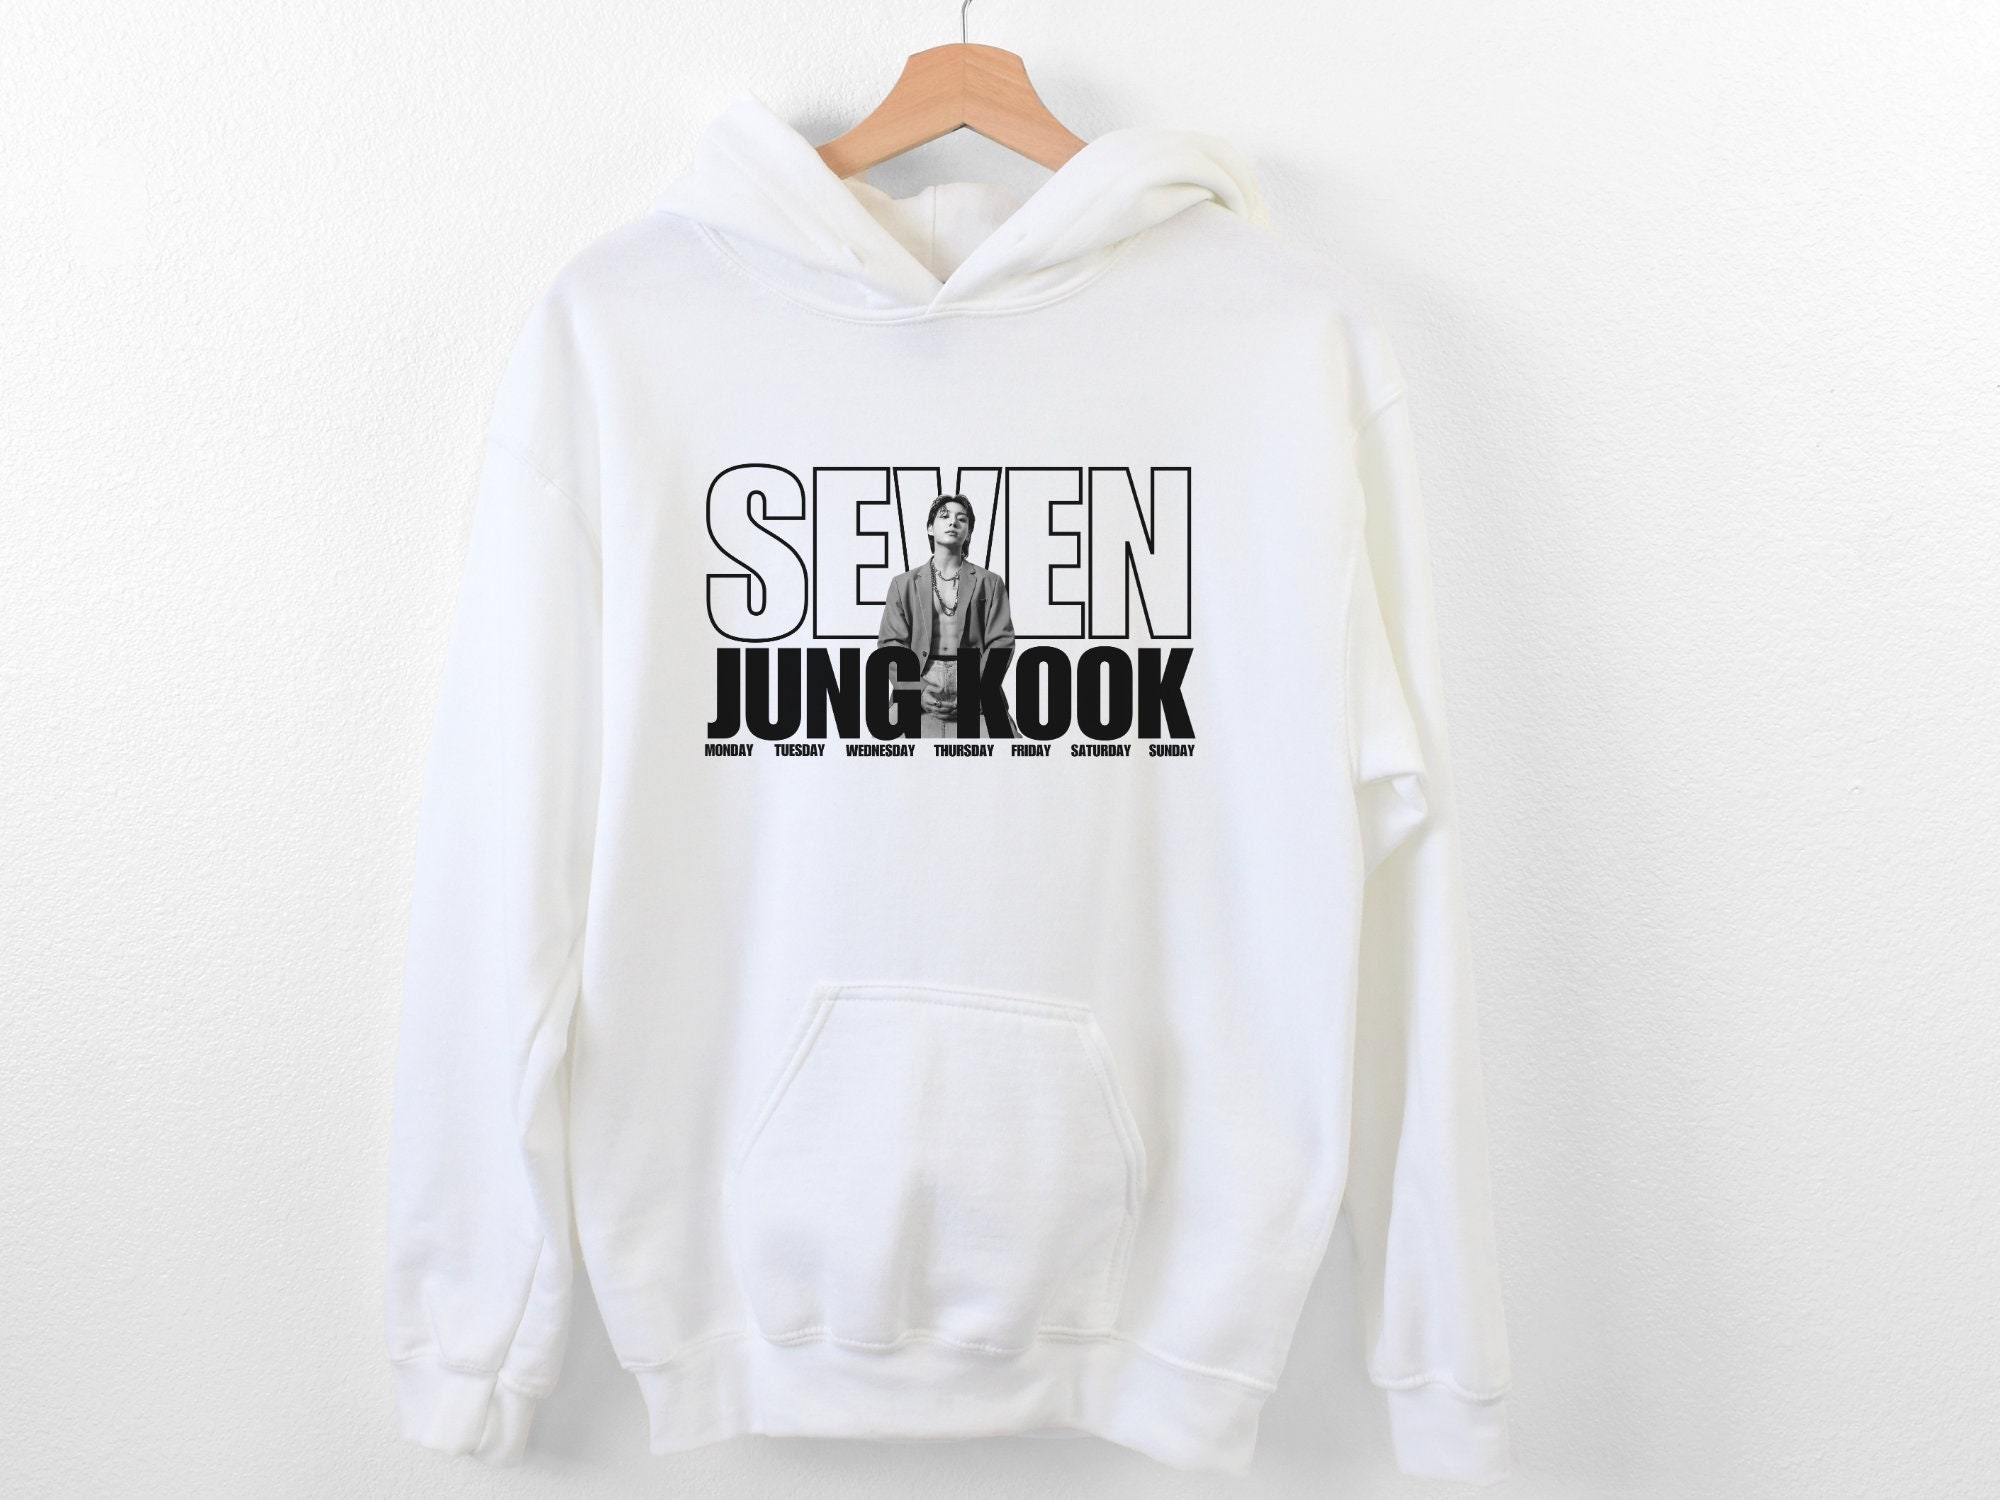 Showing off our Jungkook hoodie 🖤 #jungkook #jungkookhoodie #bts